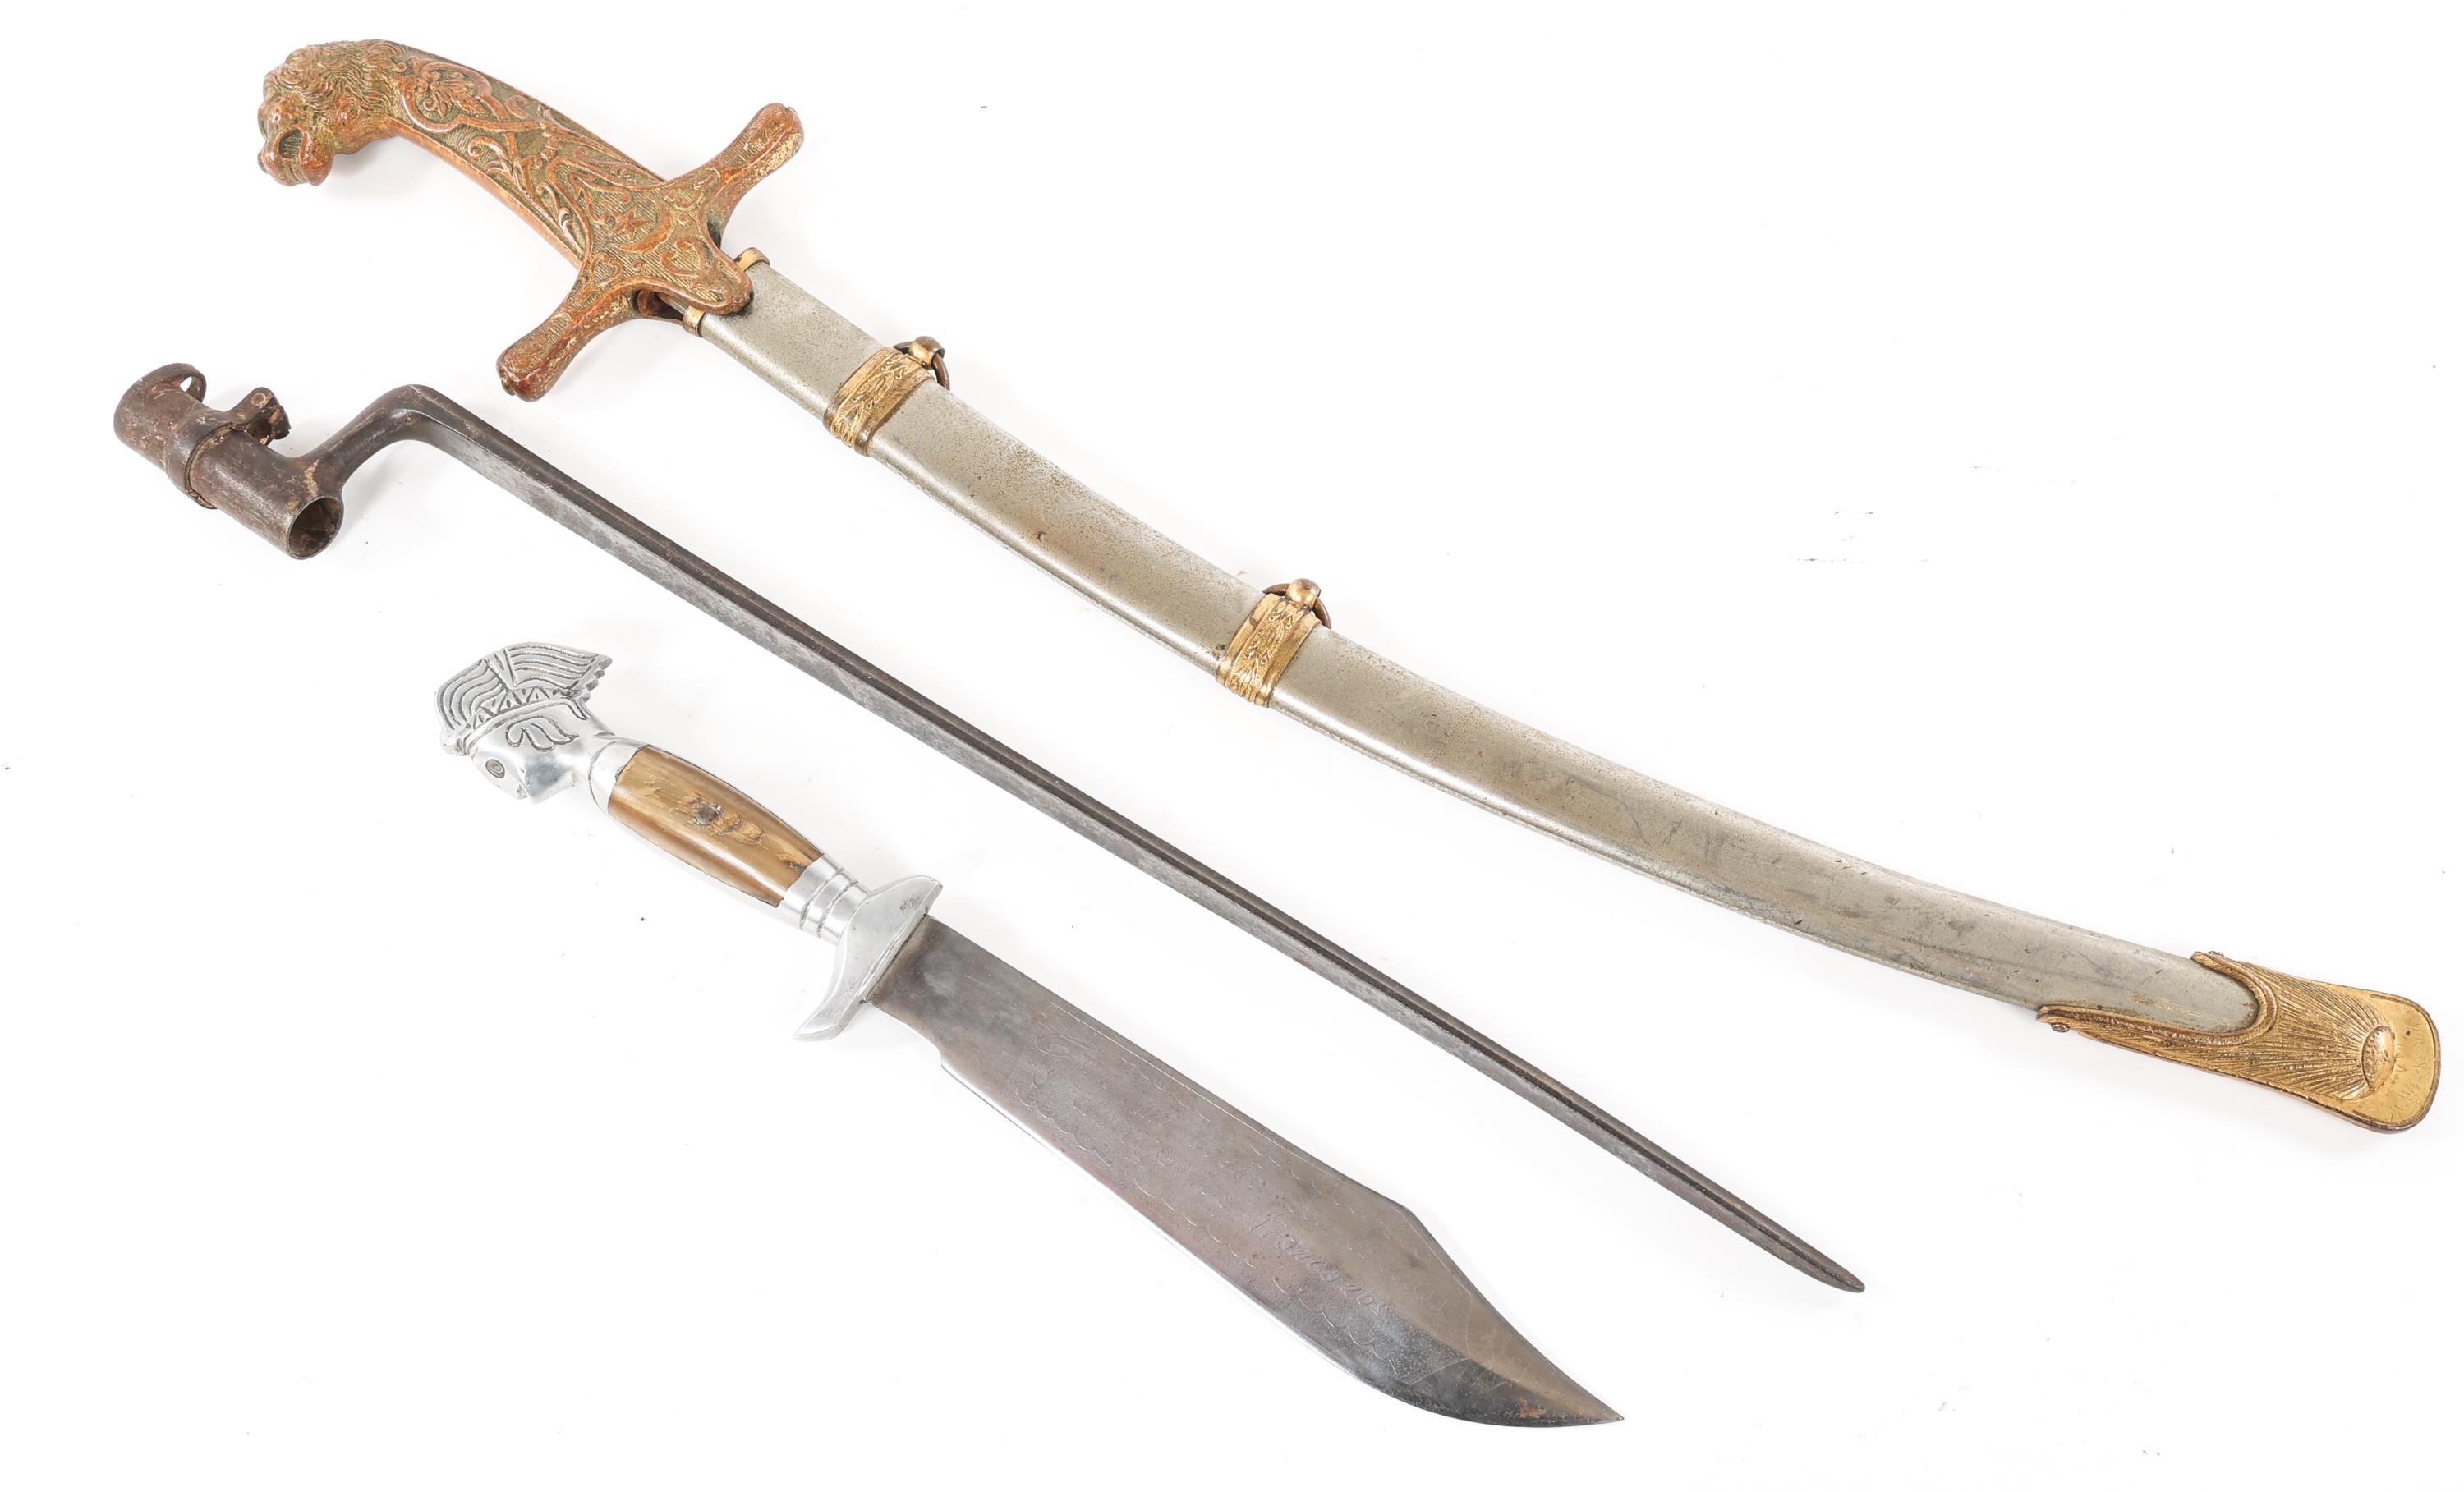 SHRINER'S SWORD - MEXICAN KNIFE & SOCKET BAYONET